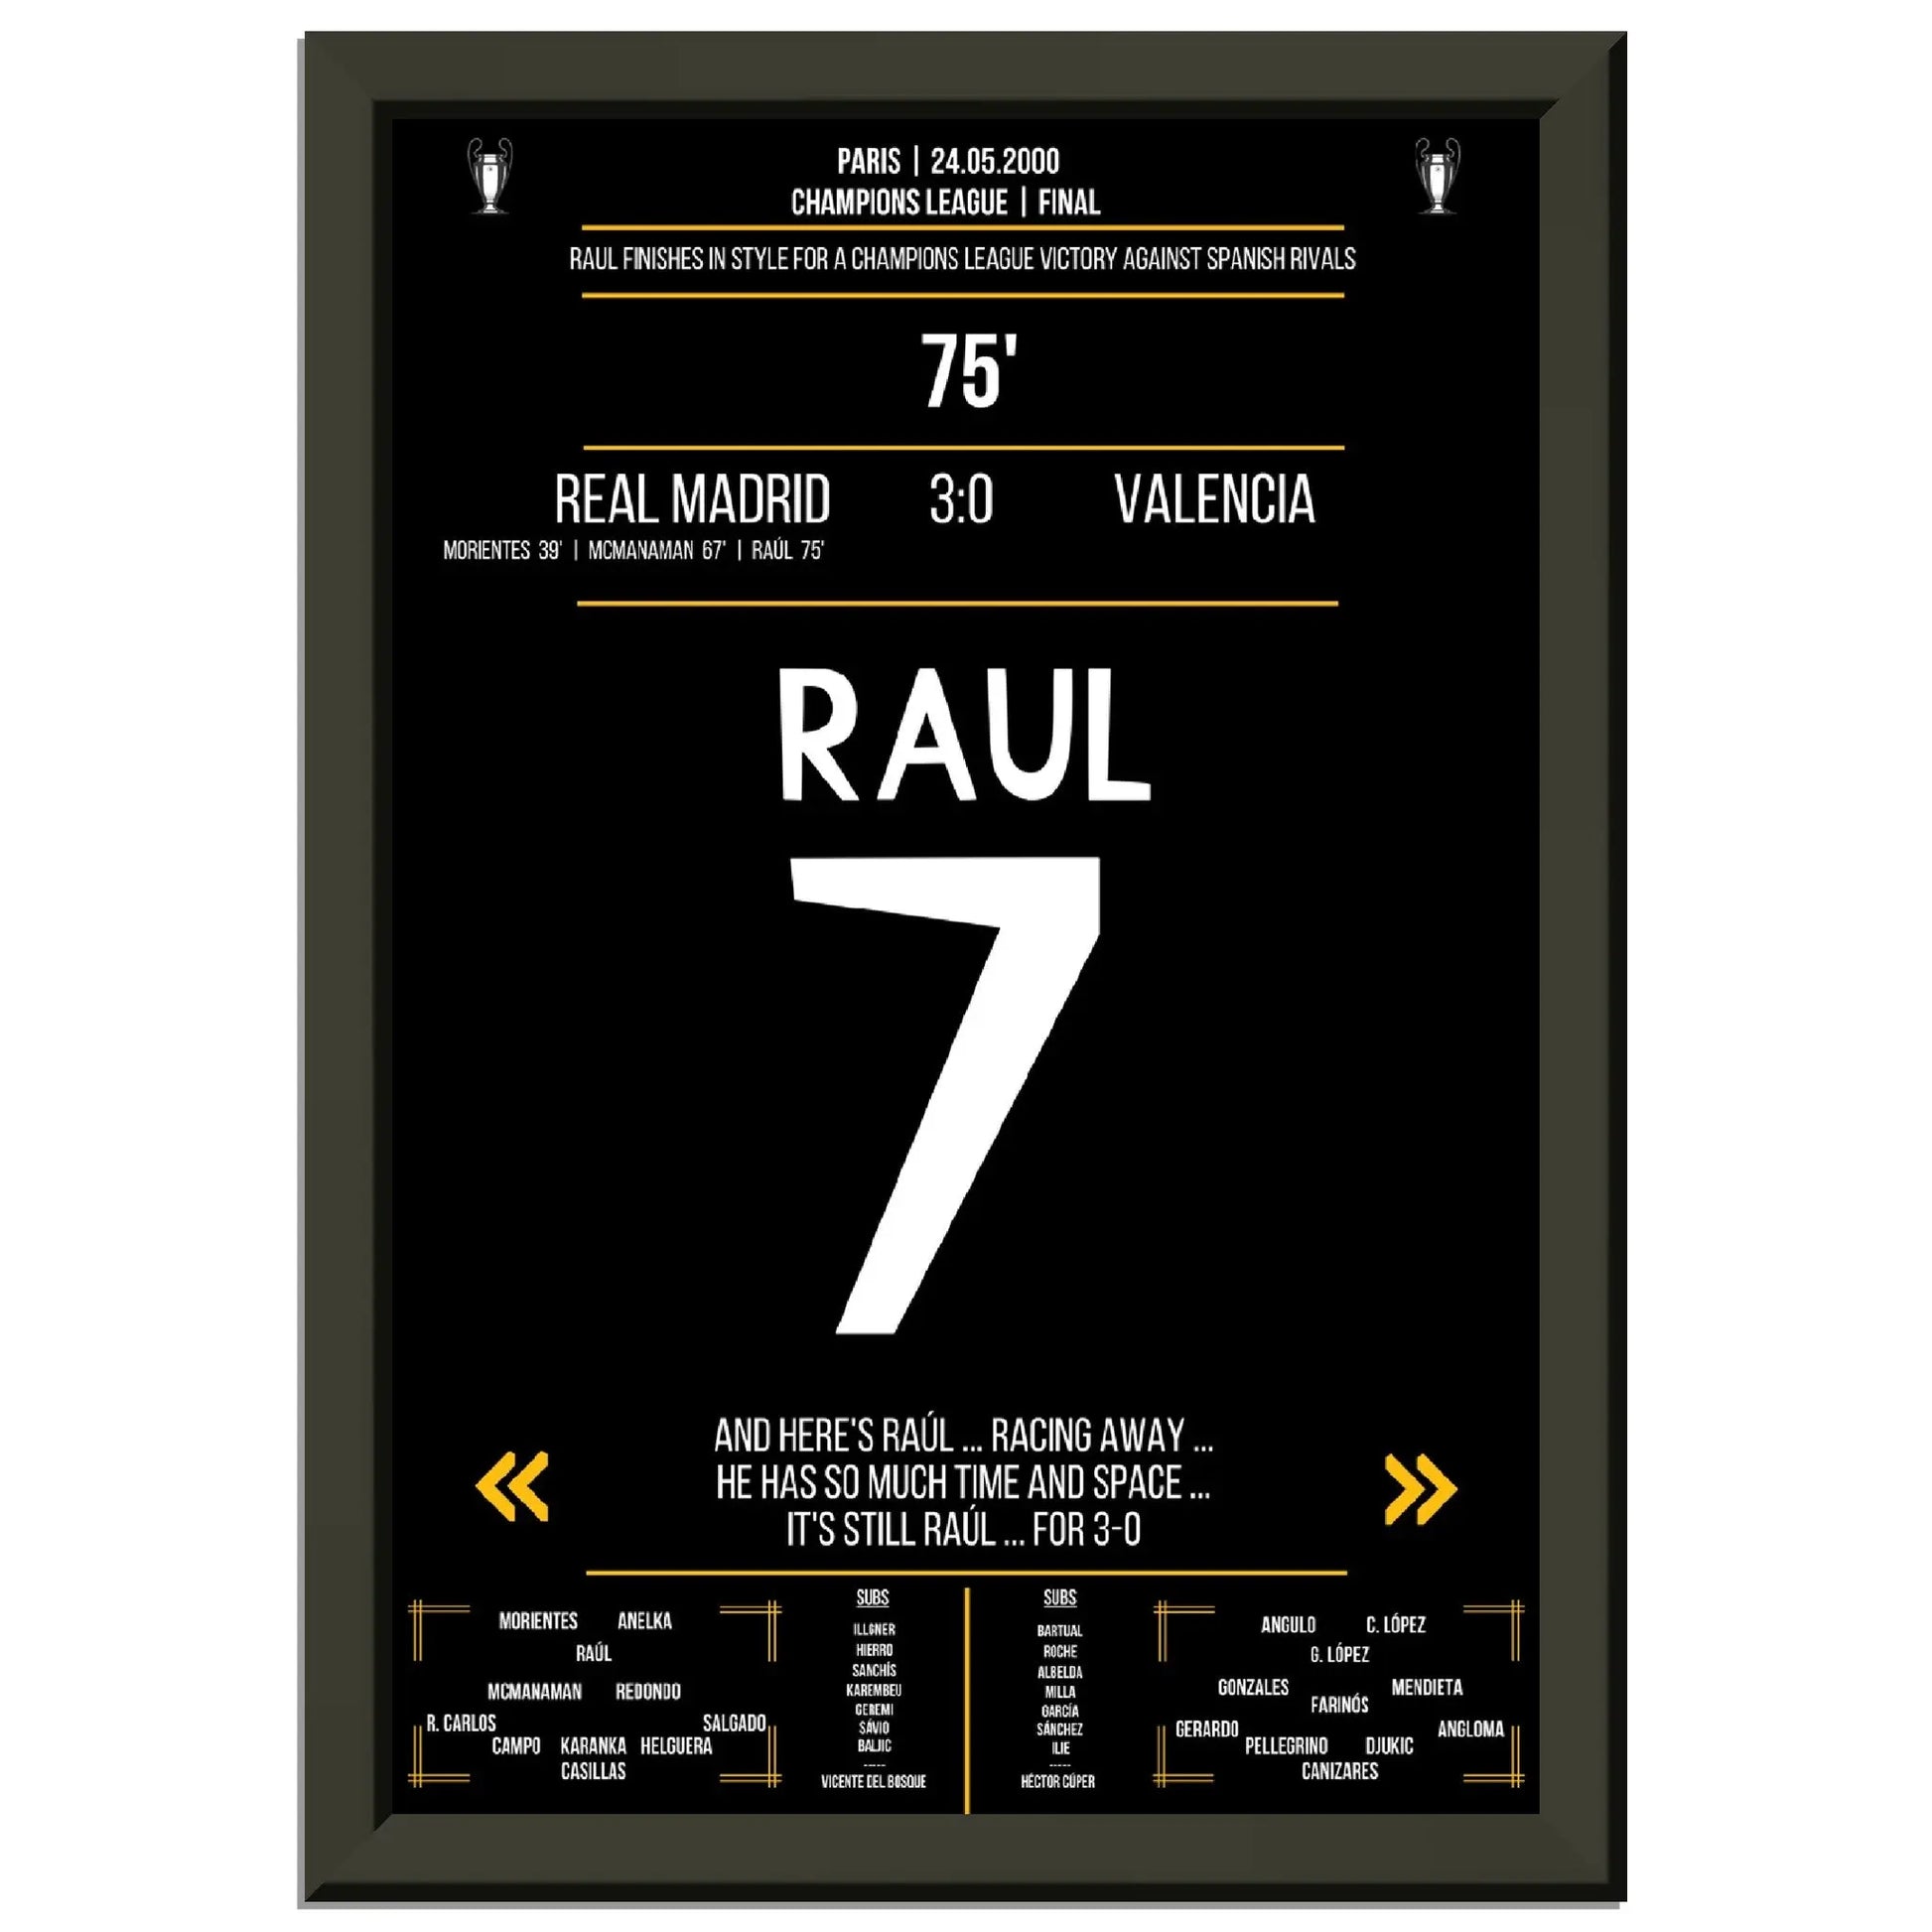 Raul's dritter Treffer im spanischen Champions League Finale 2000 